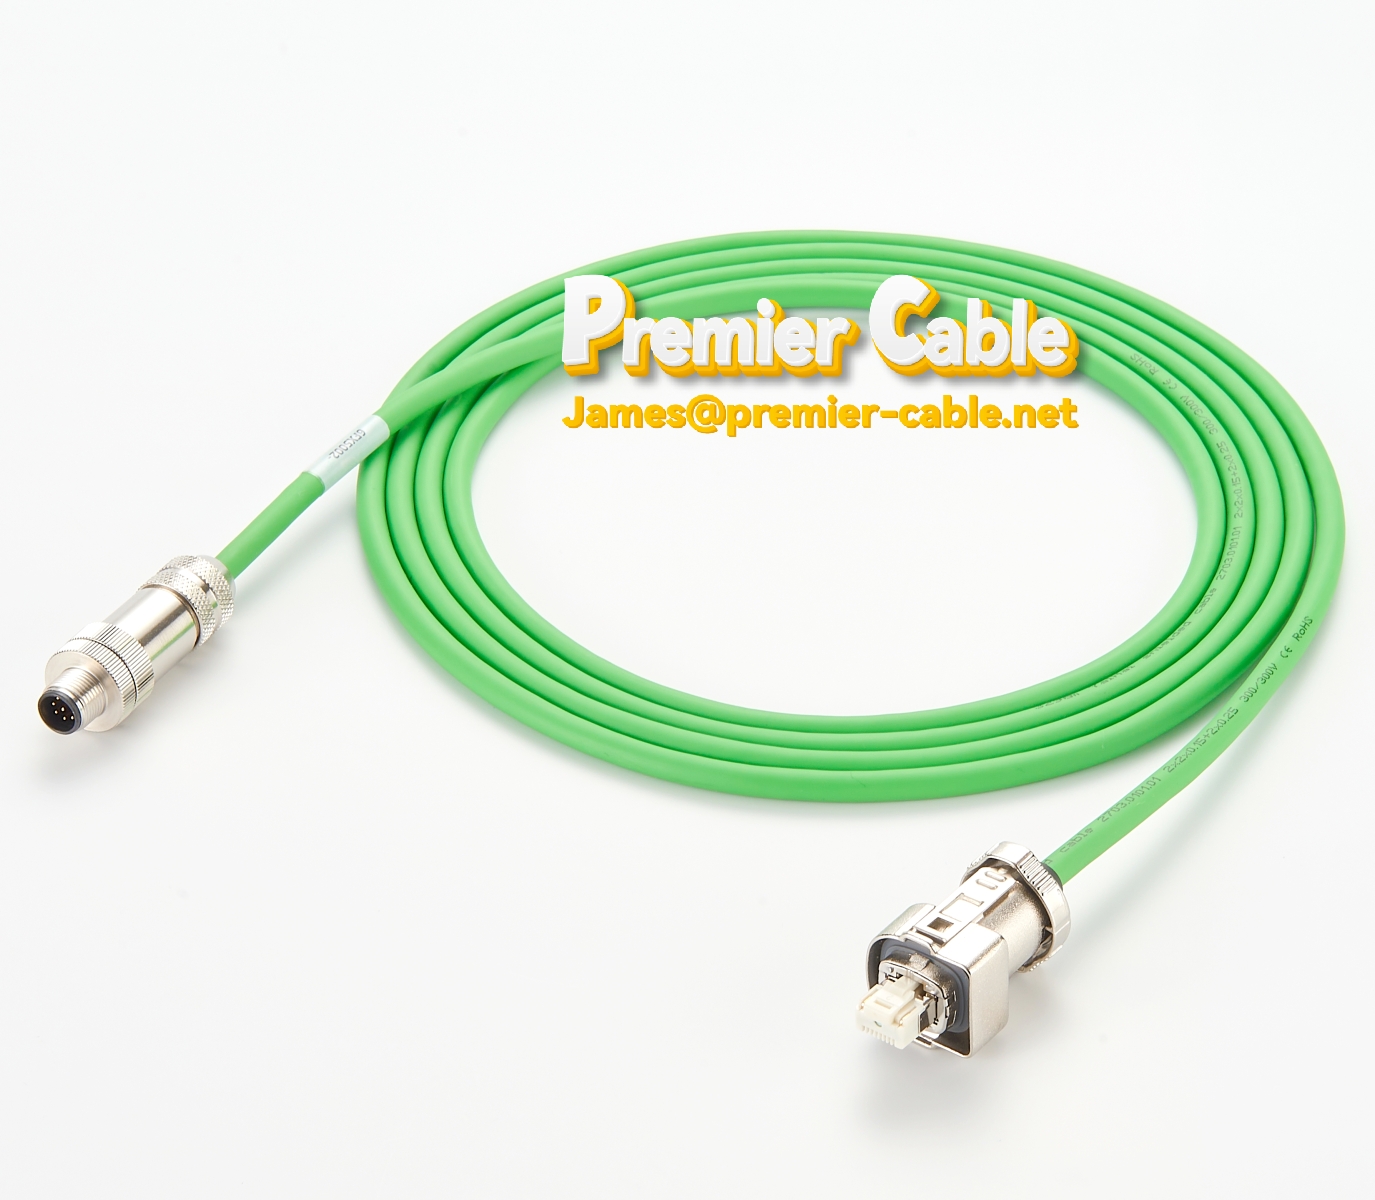 DRIVE-CLiQ Signal cable pre-assembled with RJ45 M12 